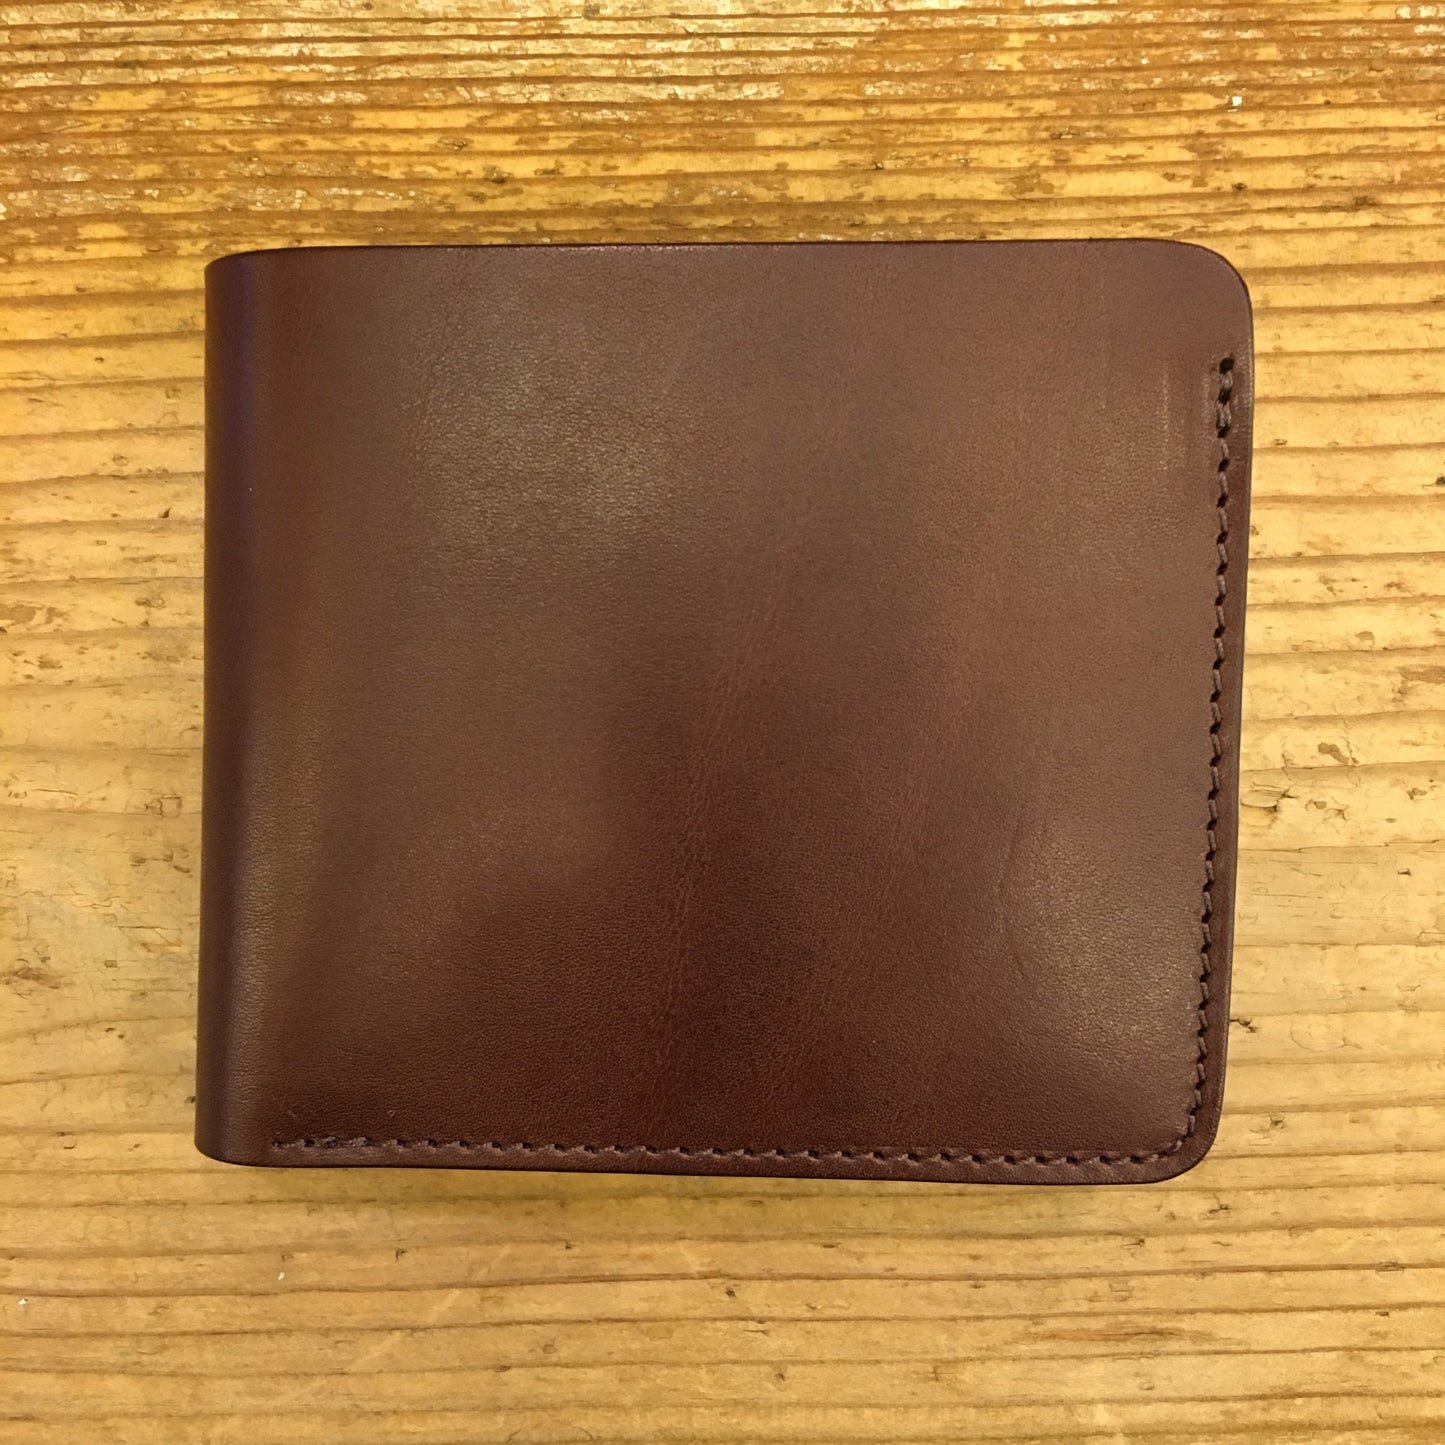 Kobashi Studio - Bifold Wallet Steer Hide Leather